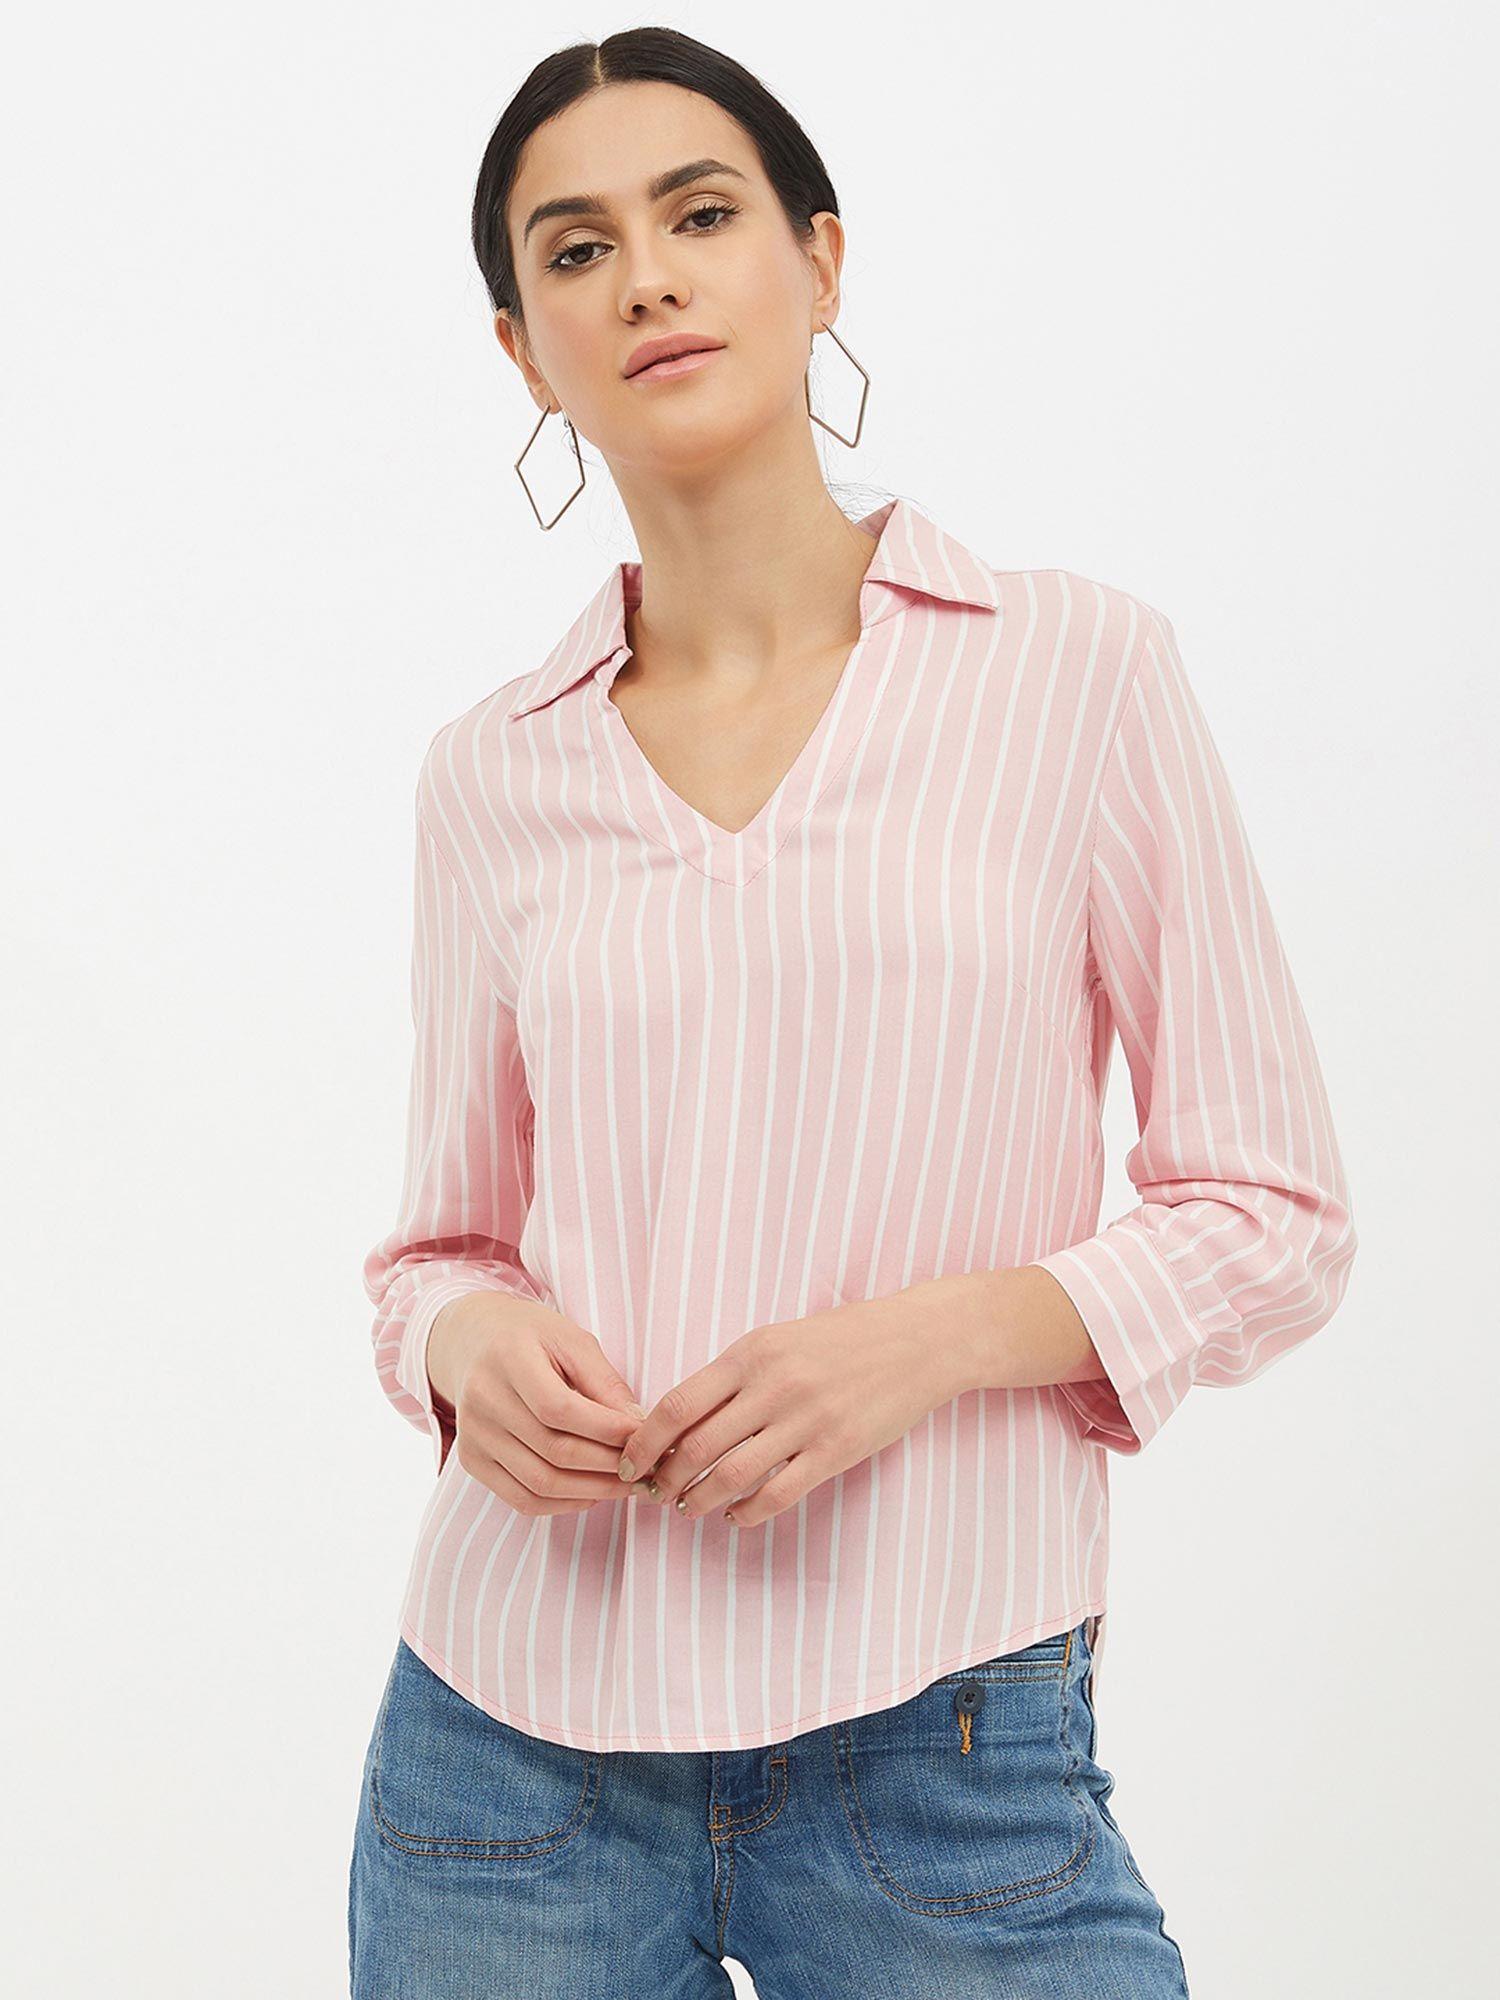 women shirt collar three-quarter sleeves striped top